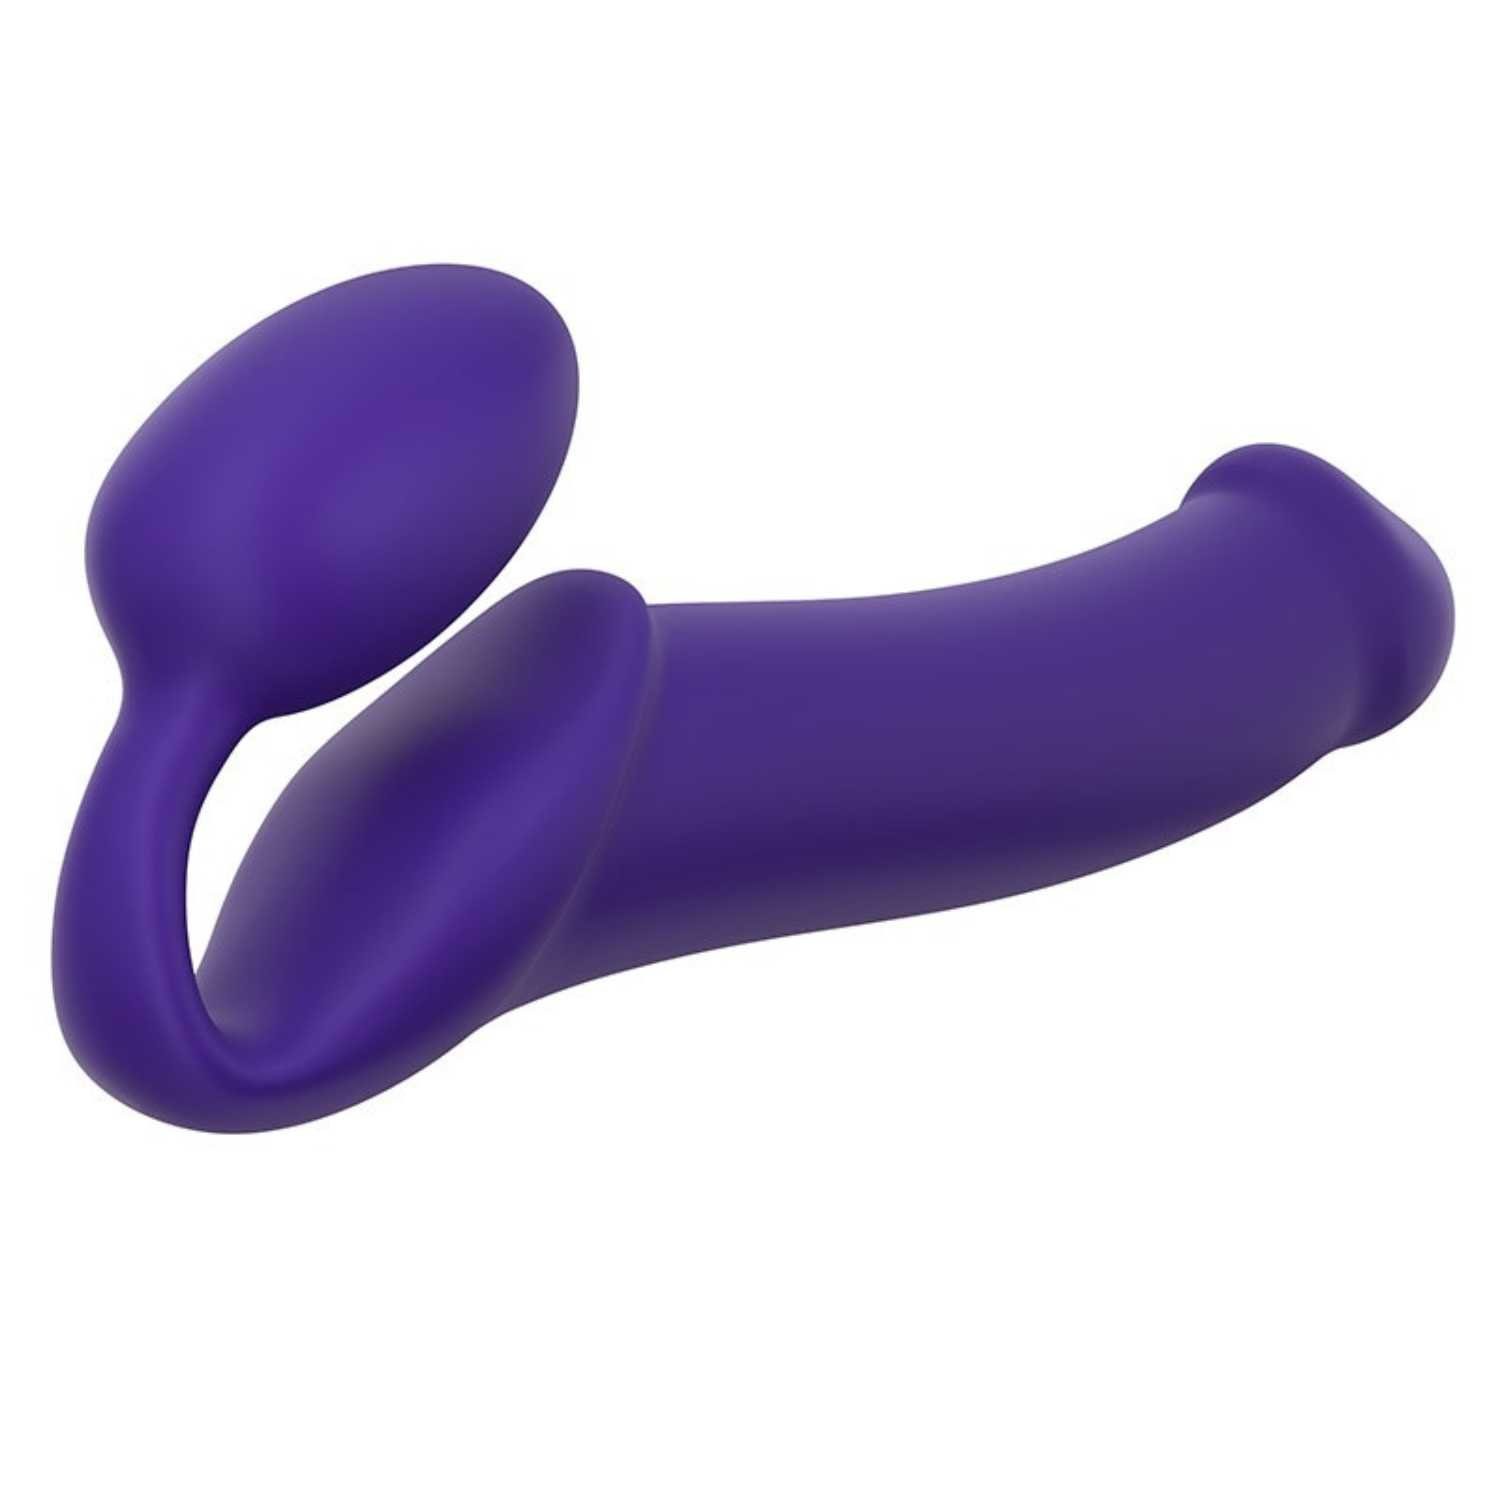 Strapless XL strap-on-me® Dildo Strap-on-Dildo violett Strap-On-Me